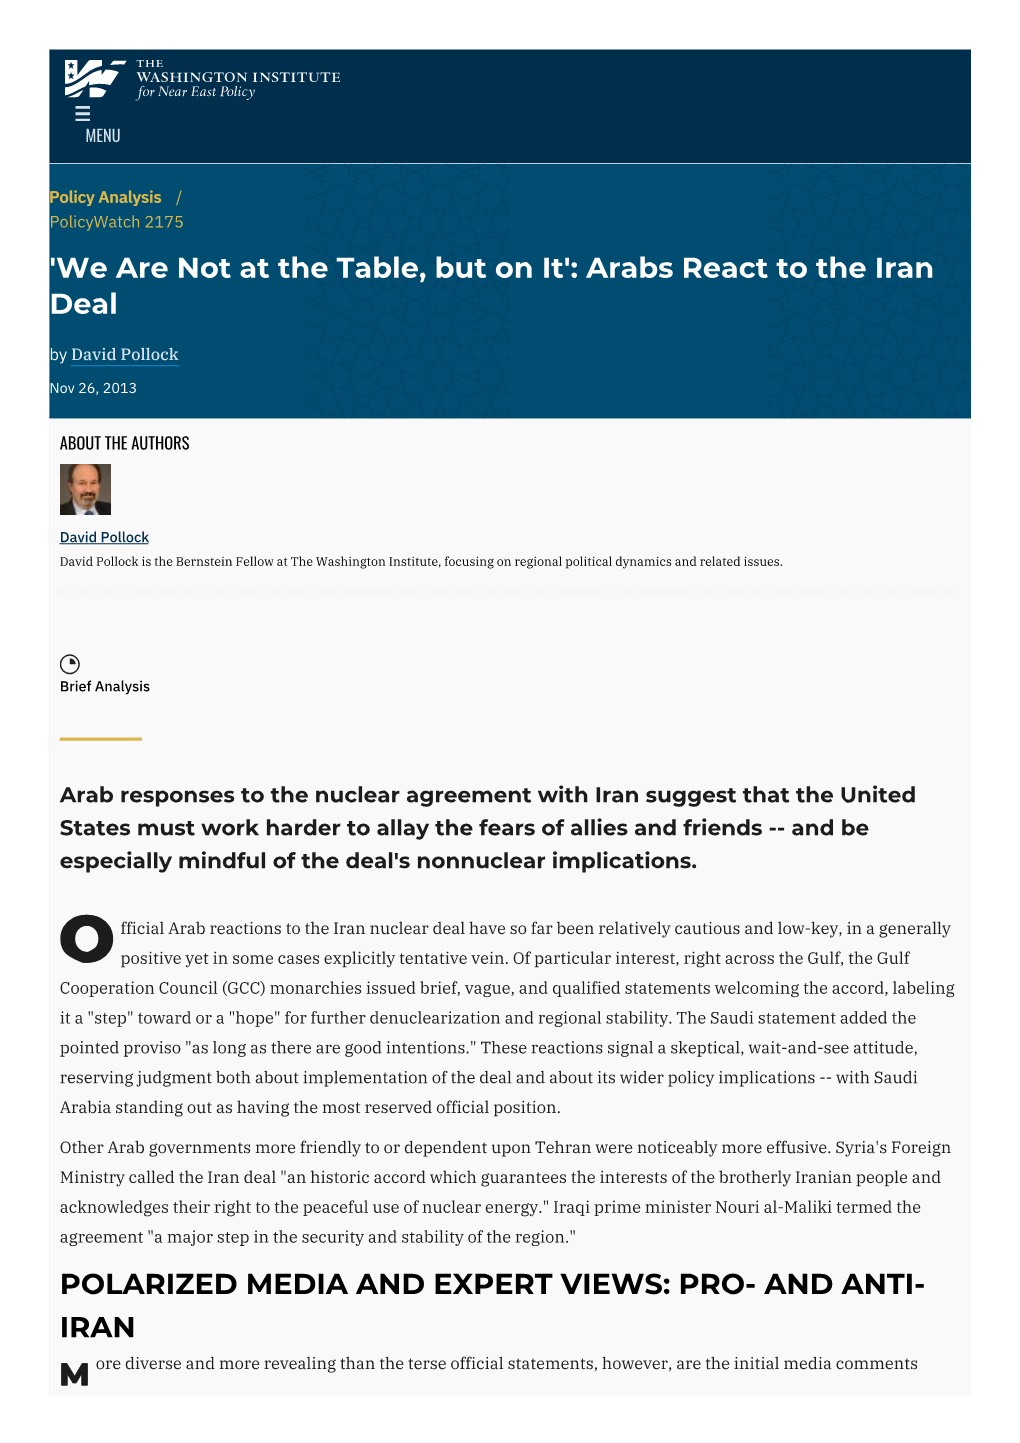 Arabs React to the Iran Deal by David Pollock